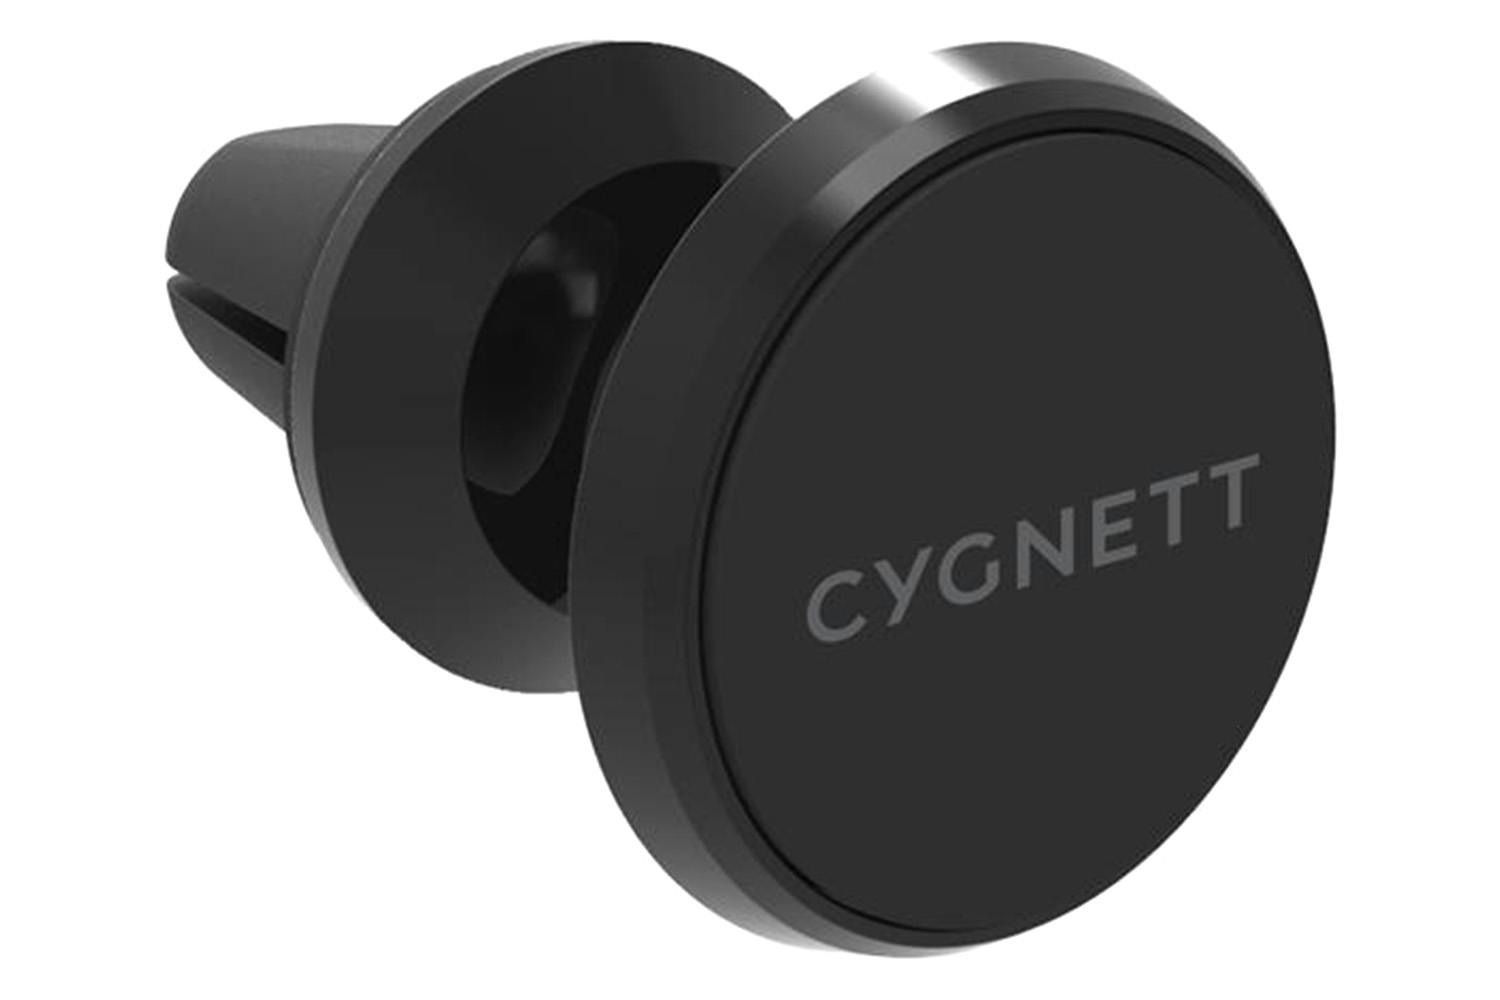 Cygnett Premium Magnetic Vent Car Mount